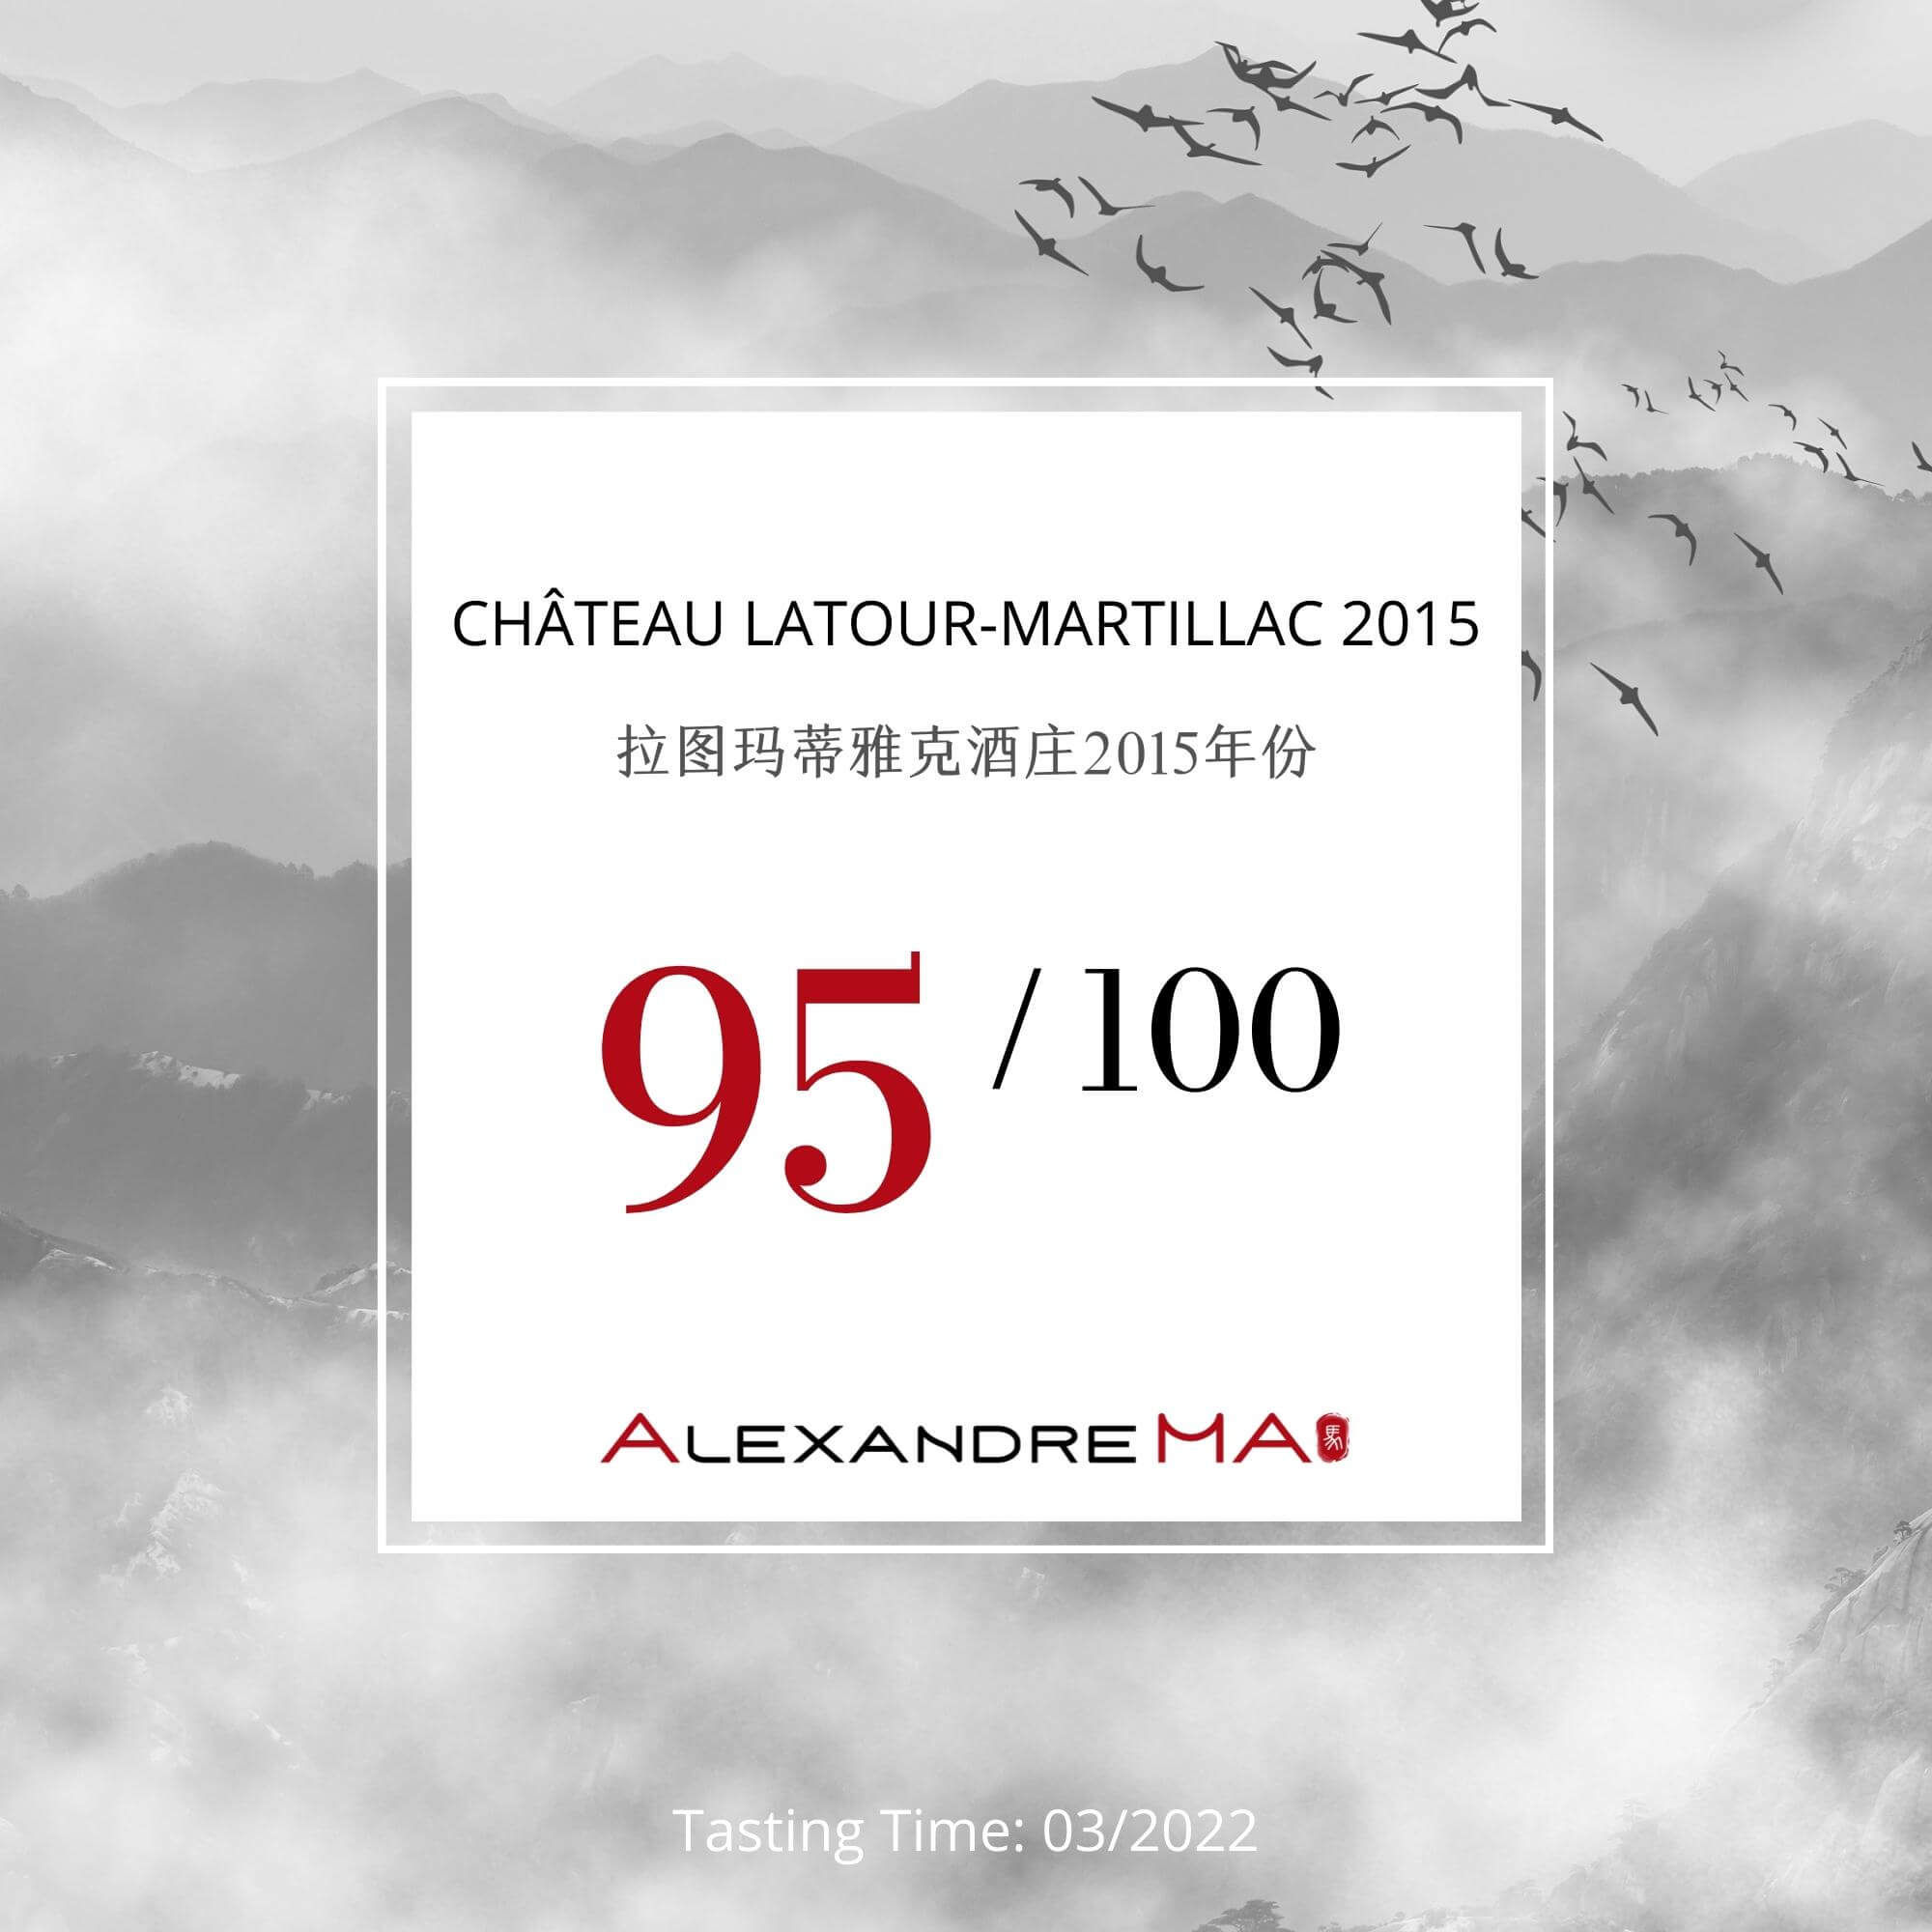 Château Latour-Martillac 拉图玛蒂雅克酒庄 2015 - Alexandre Ma